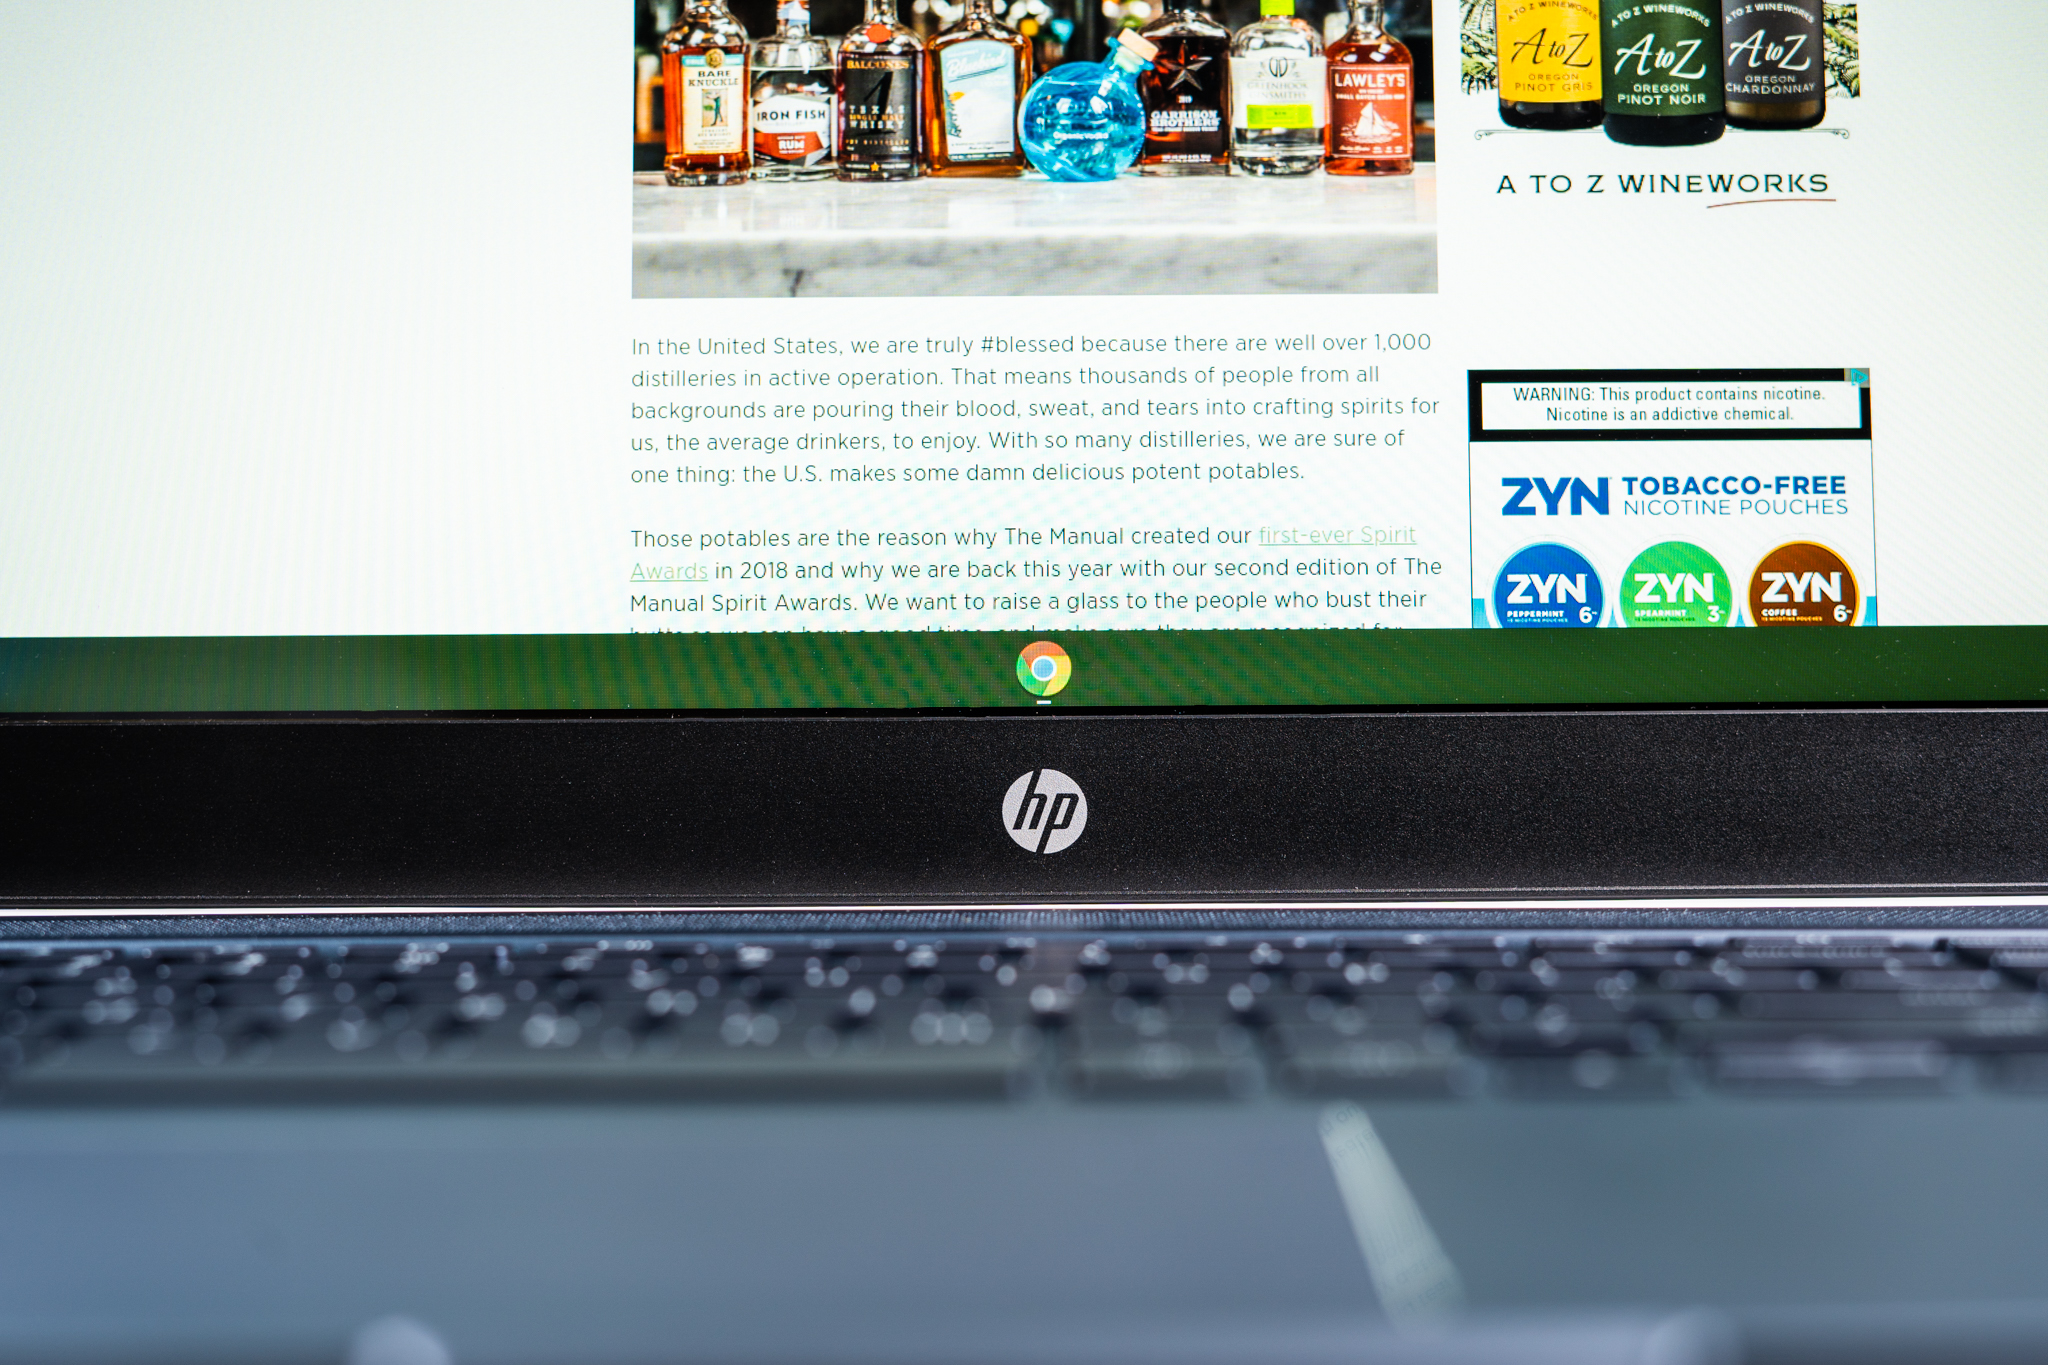 HP Chromebook 15.6 Laptop - 15at-na000